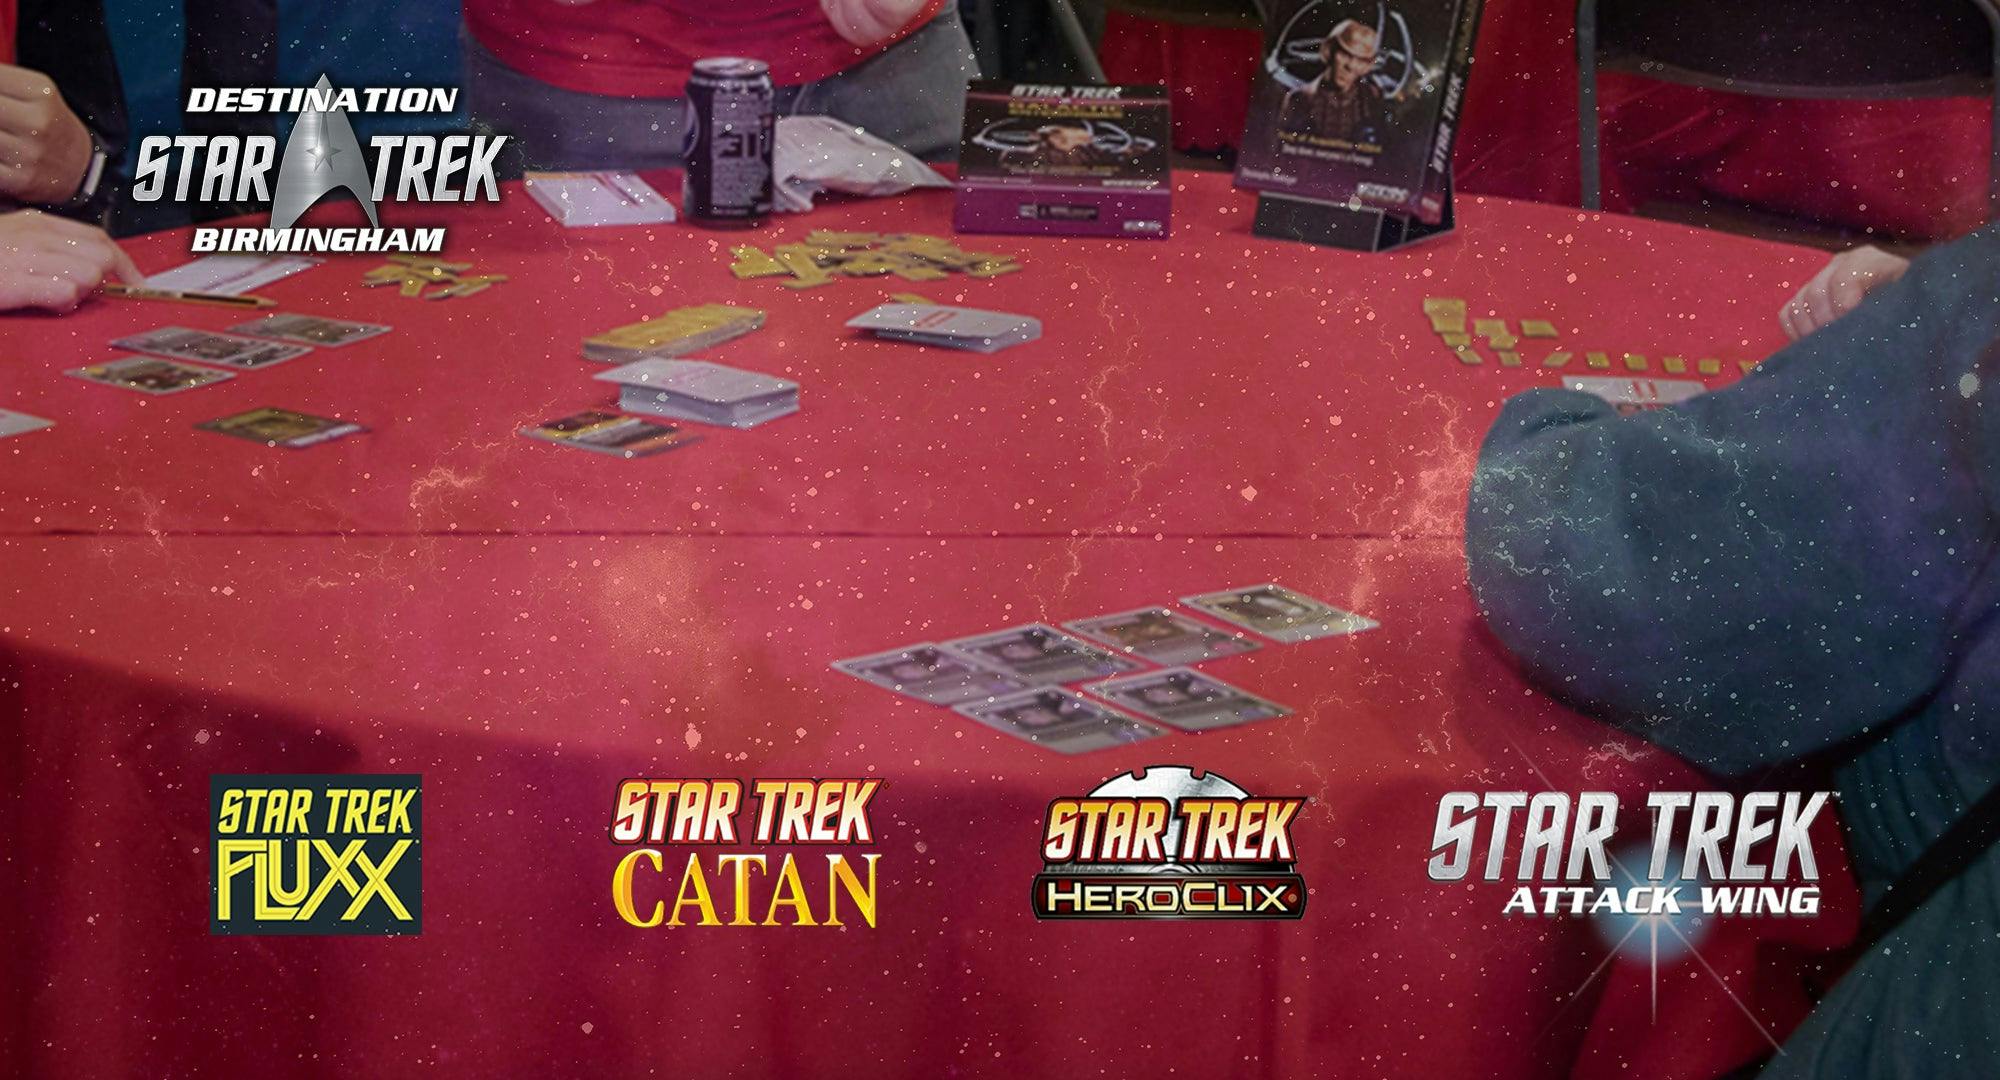 Destination Star Trek Birmingham Board Games